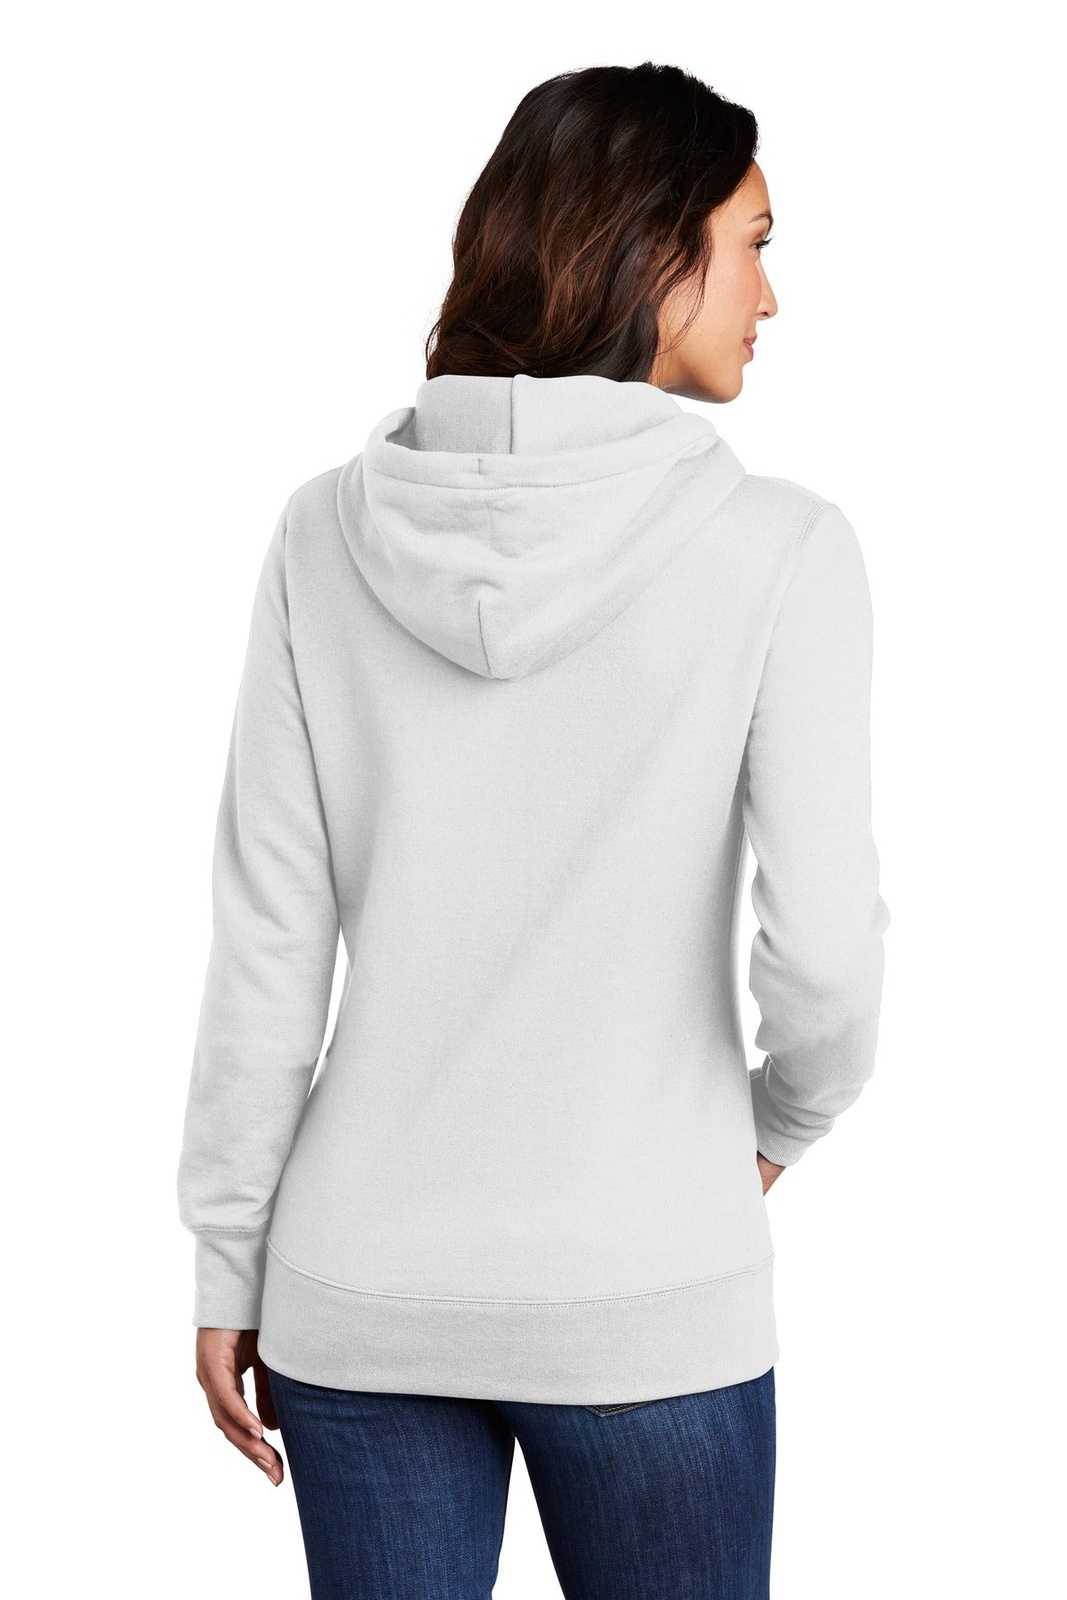 Port &amp; Company LPC78H Ladies Core Fleece Pullover Hooded Sweatshirt - White - HIT a Double - 2